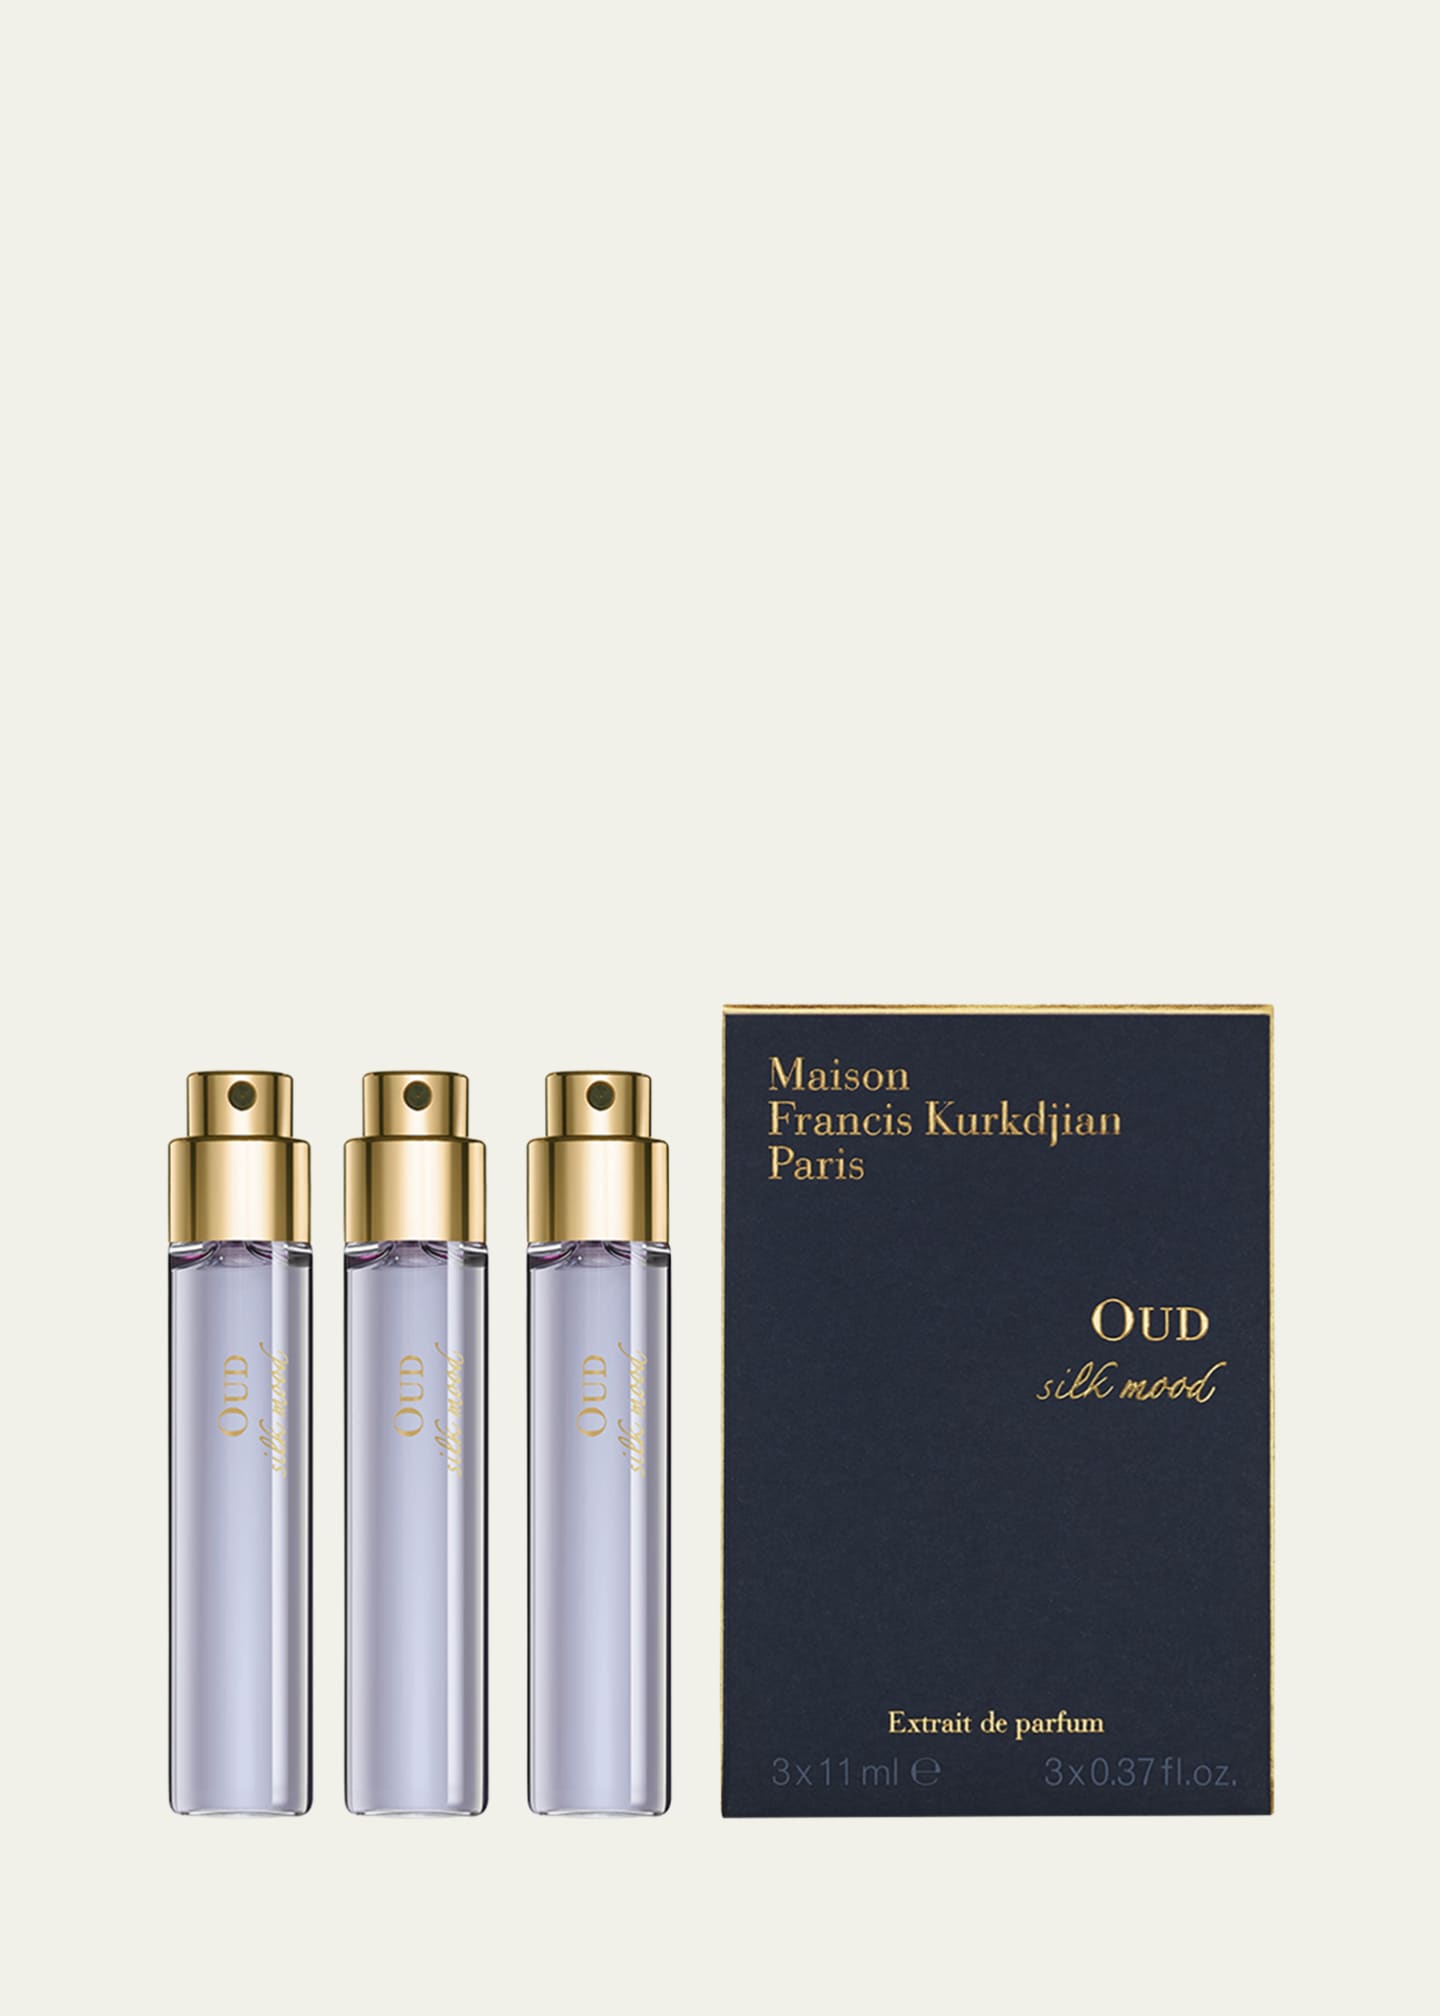 Maison Francis Kurkdjian OUD Silk Mood Extrait de Parfum